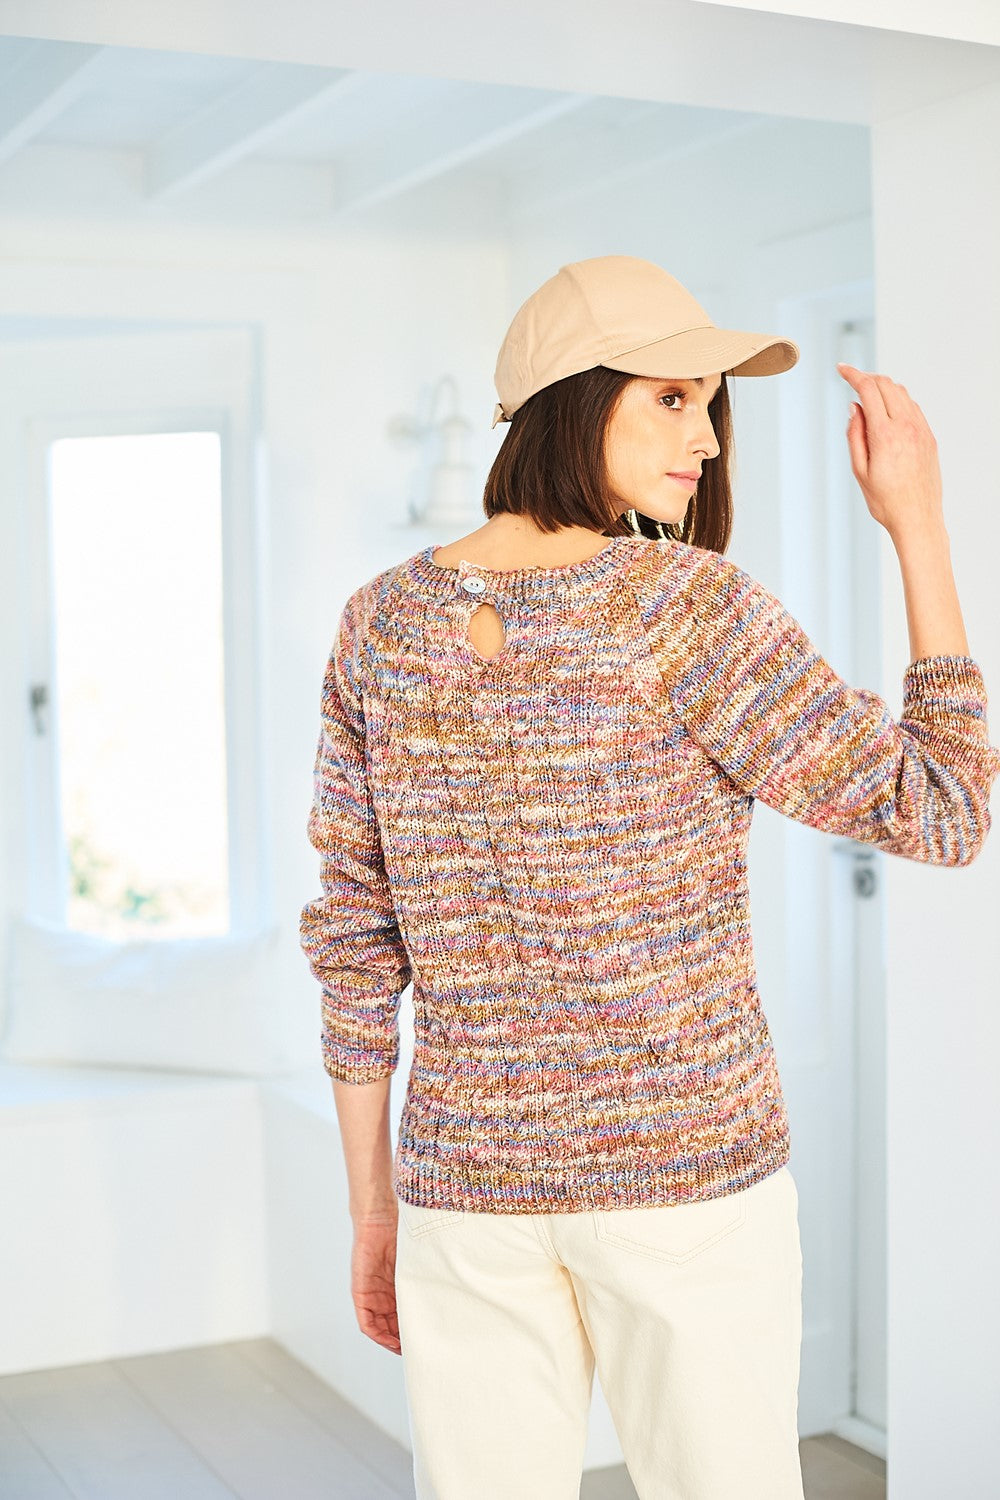 Stylecraft Sweater & Top - 10054